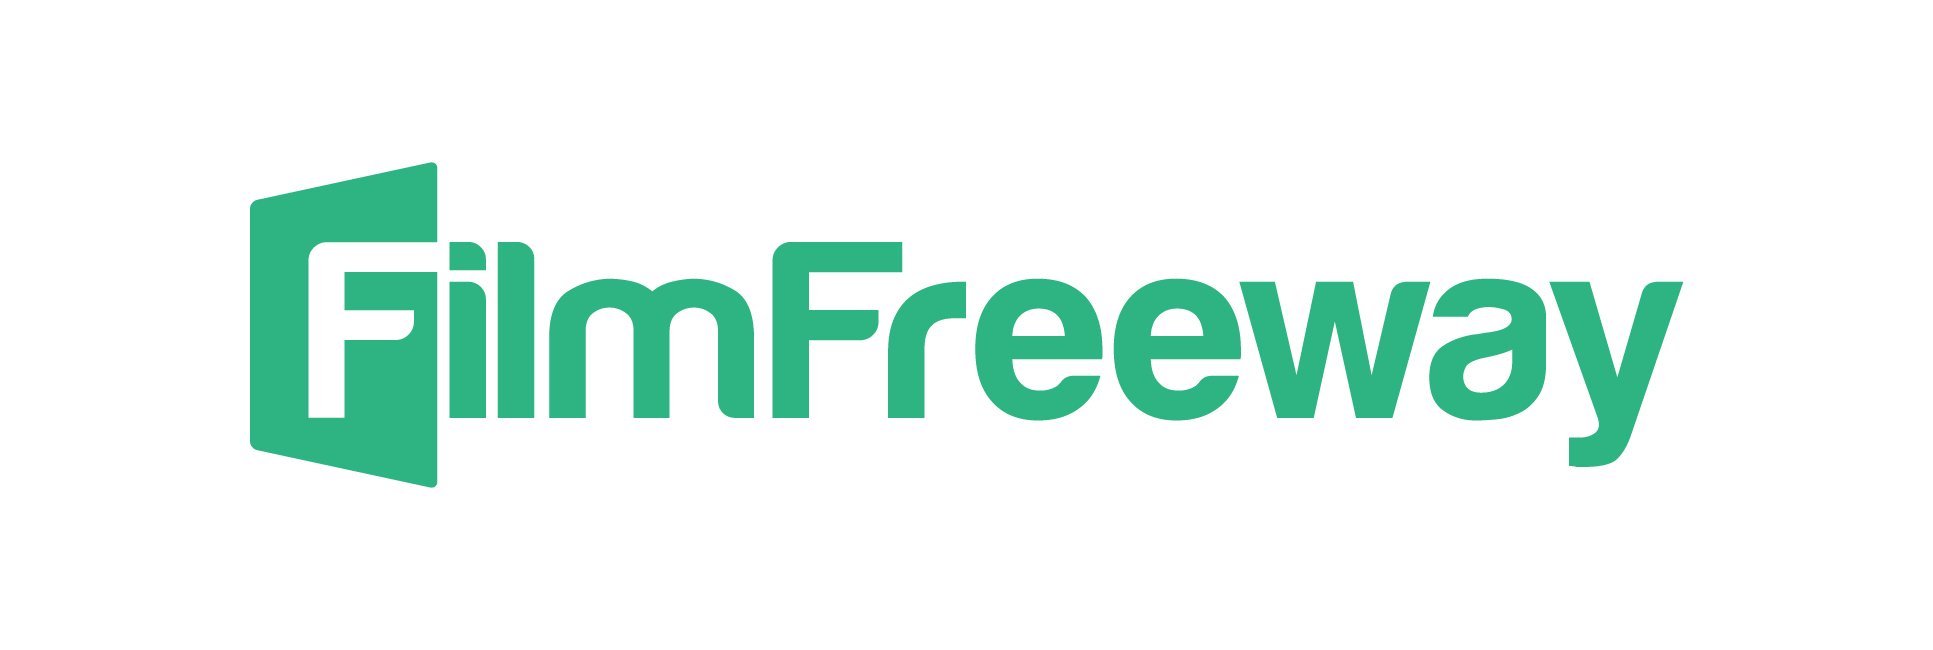 filmfreeway-logo-hires-green-2a2eb04b57f8f51fa2d3c260cc4da8bf